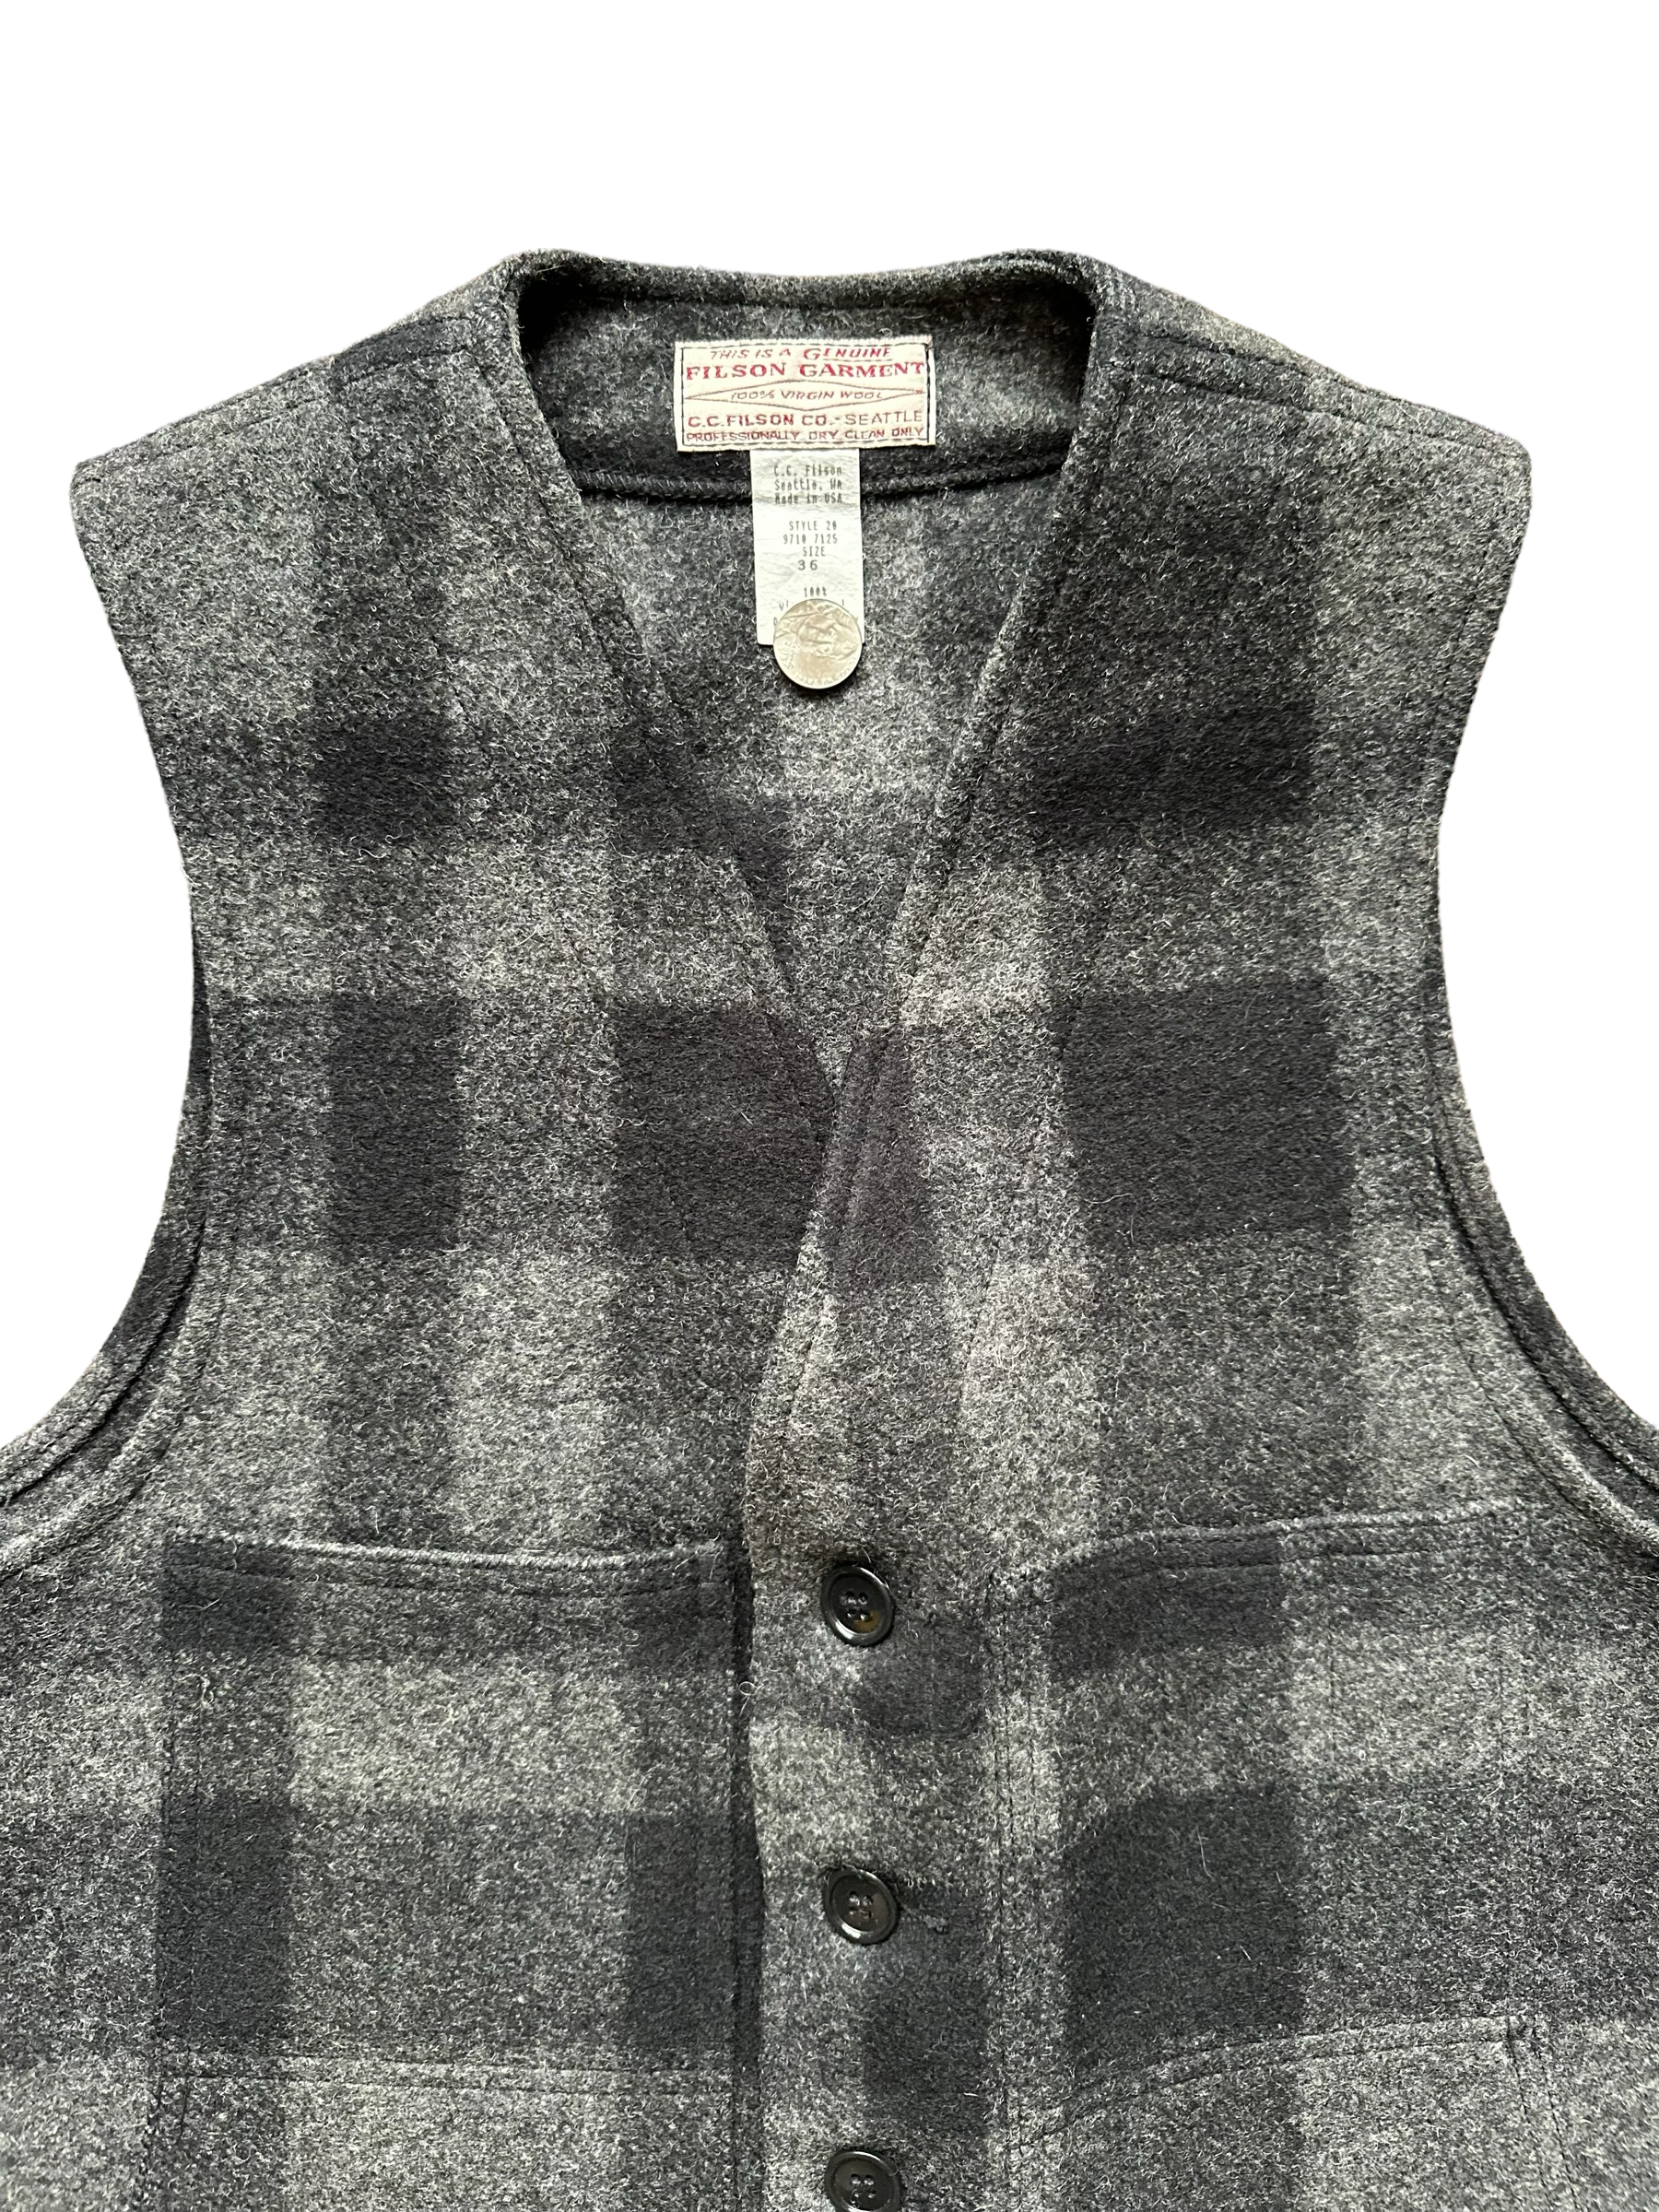 Upper Front View of Vintage Filson Mackinaw Vest SZ 36 |  Charcoal & Black Mackinaw Wool | Filson Seattle Workwear